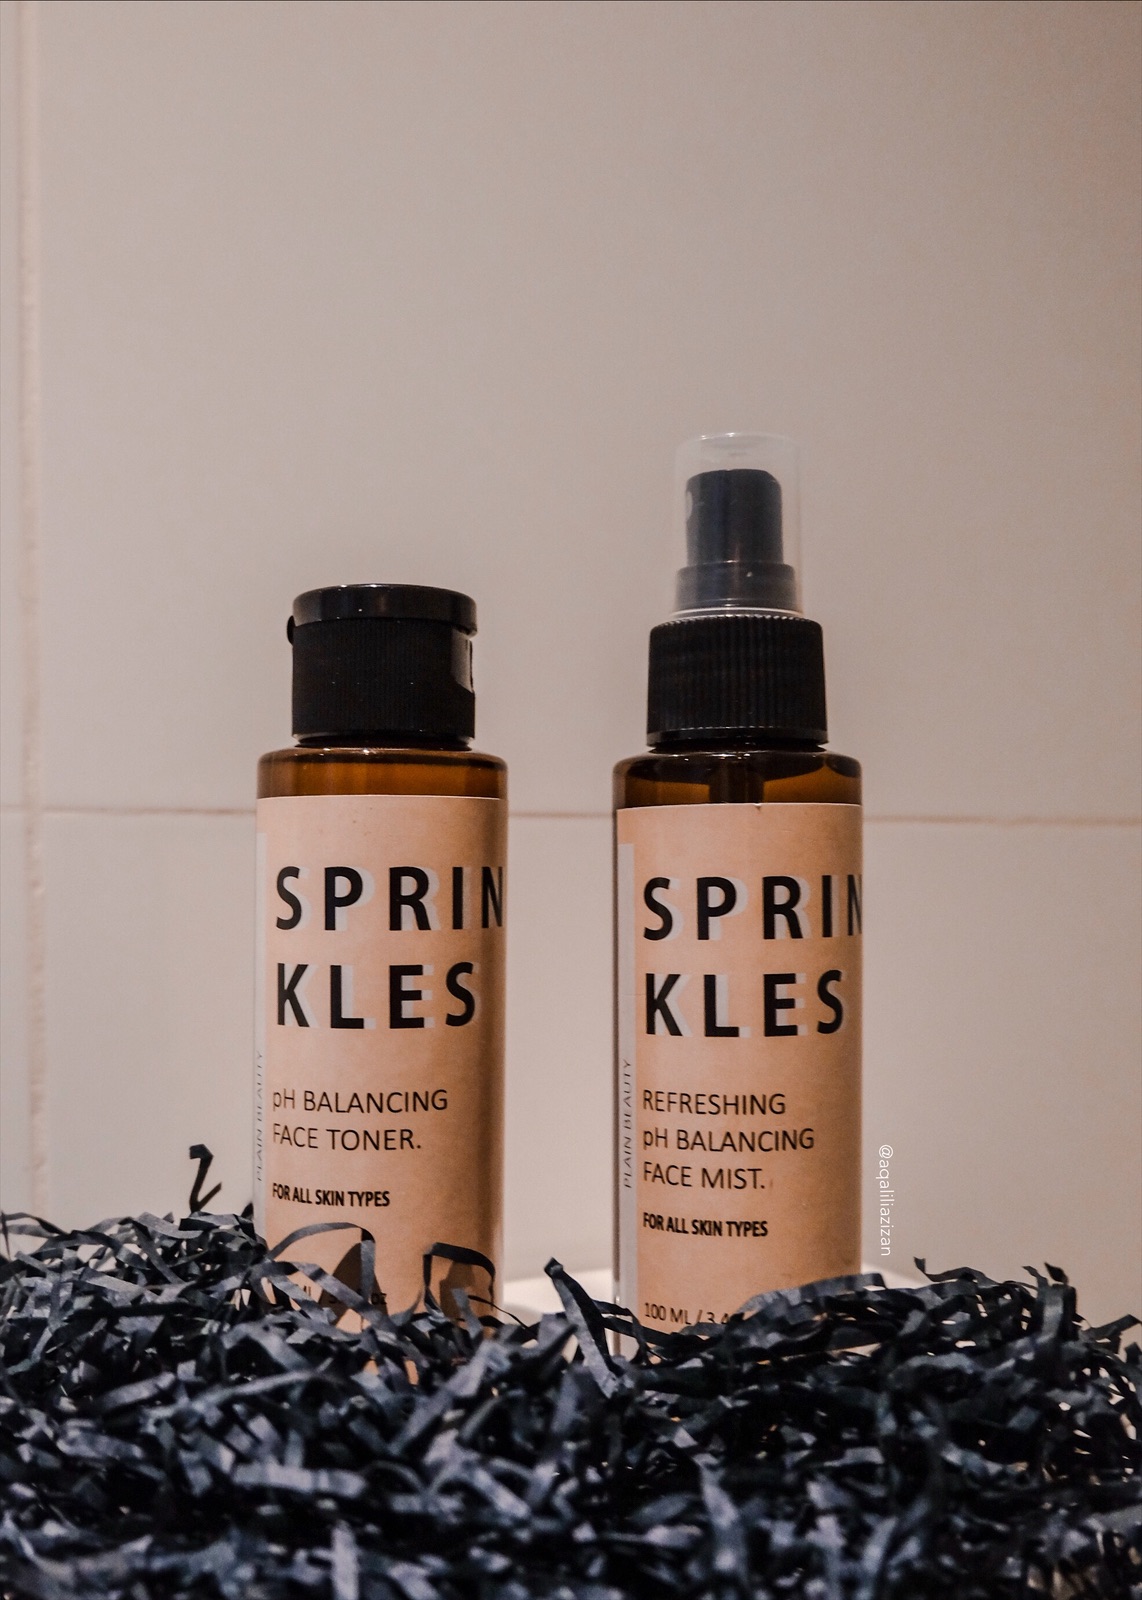 SPRIN-KLES Refreshing pH Balancing Face Toner & Mist Curitan Aqalili